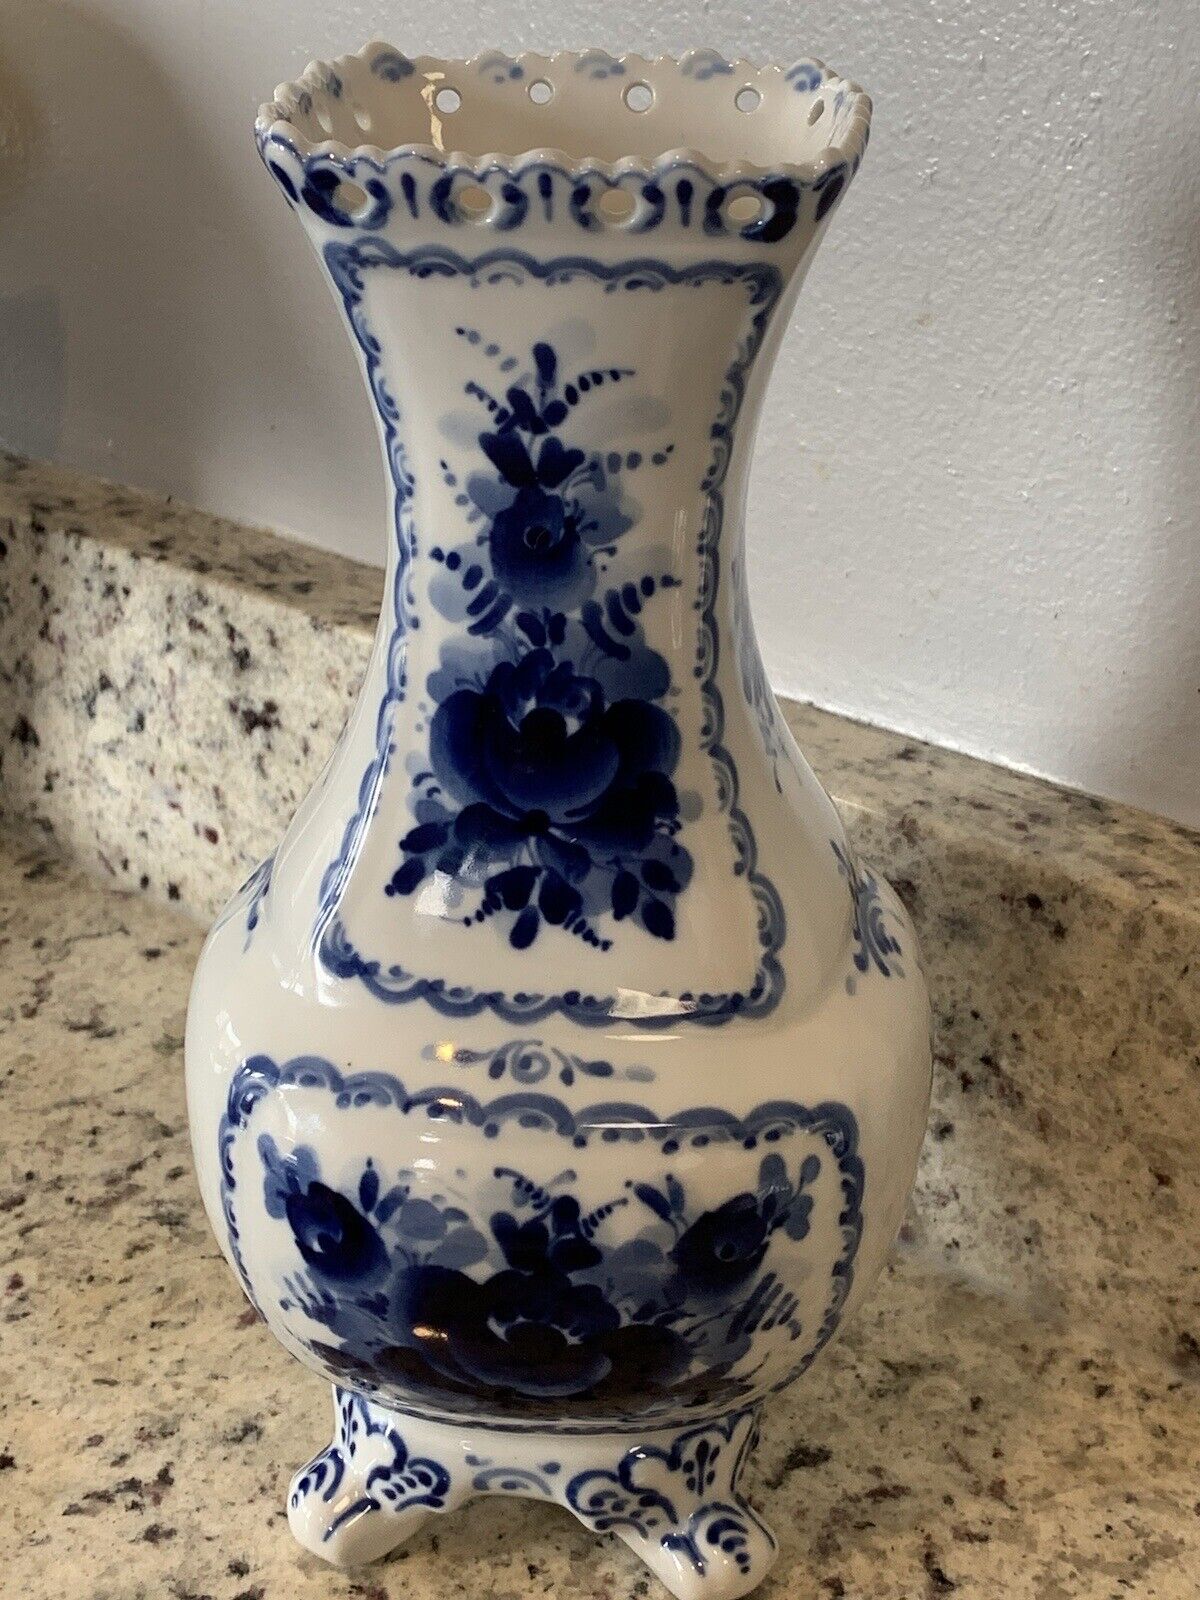 9” Gzhel Porcelain Vase, Blue Russian Handmade Ceramic Flowers Vase Beautiful